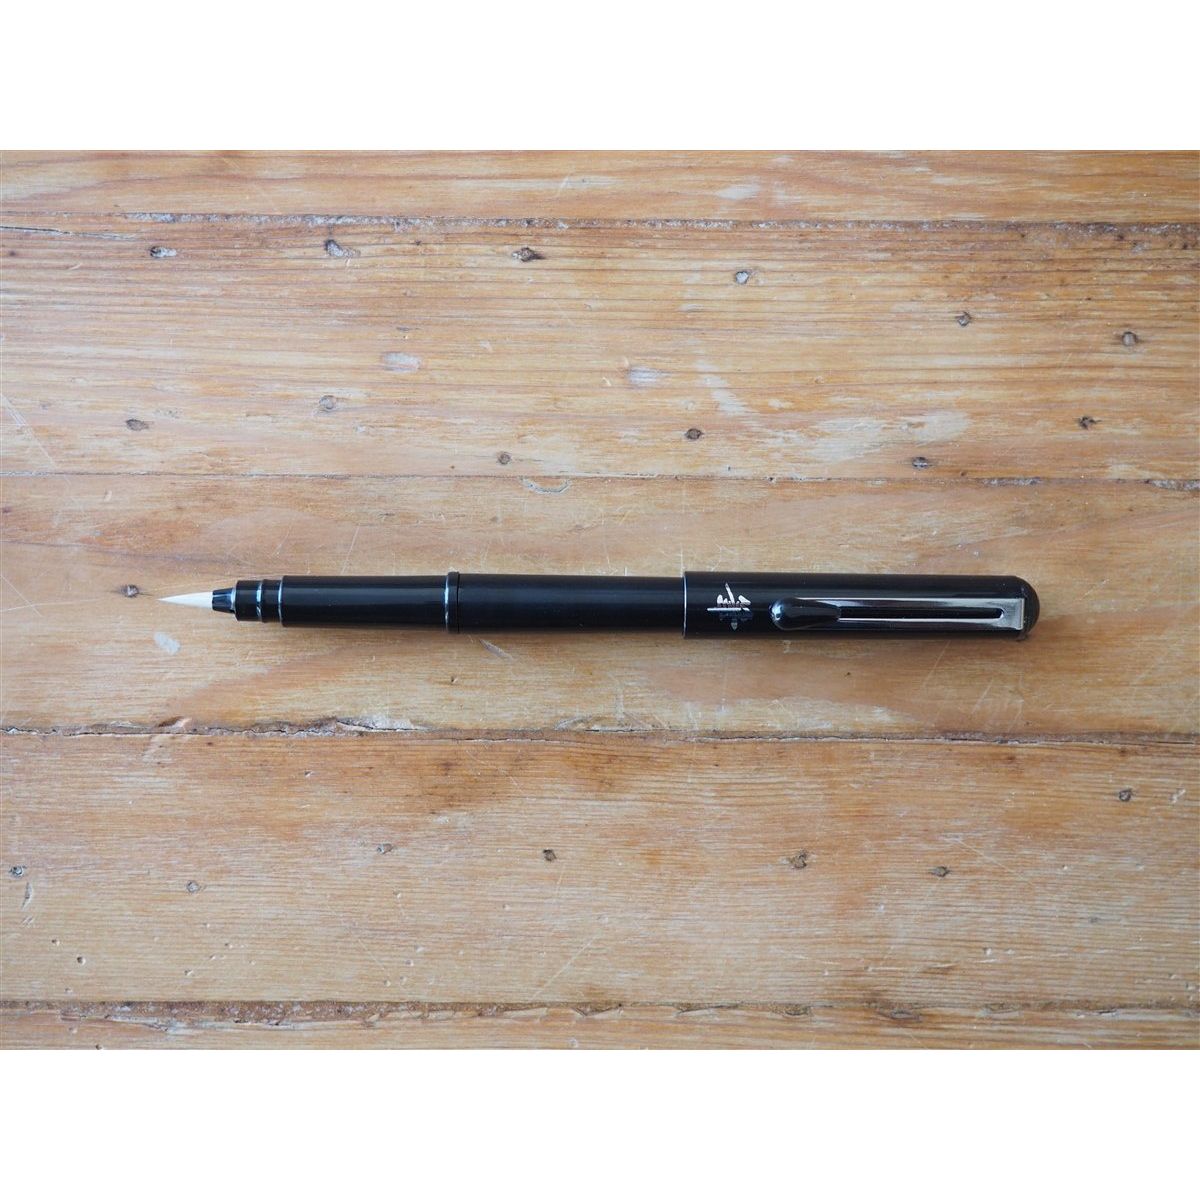  Pentel XGFKP/FP10-A Brush Pen and Two Refills, Black